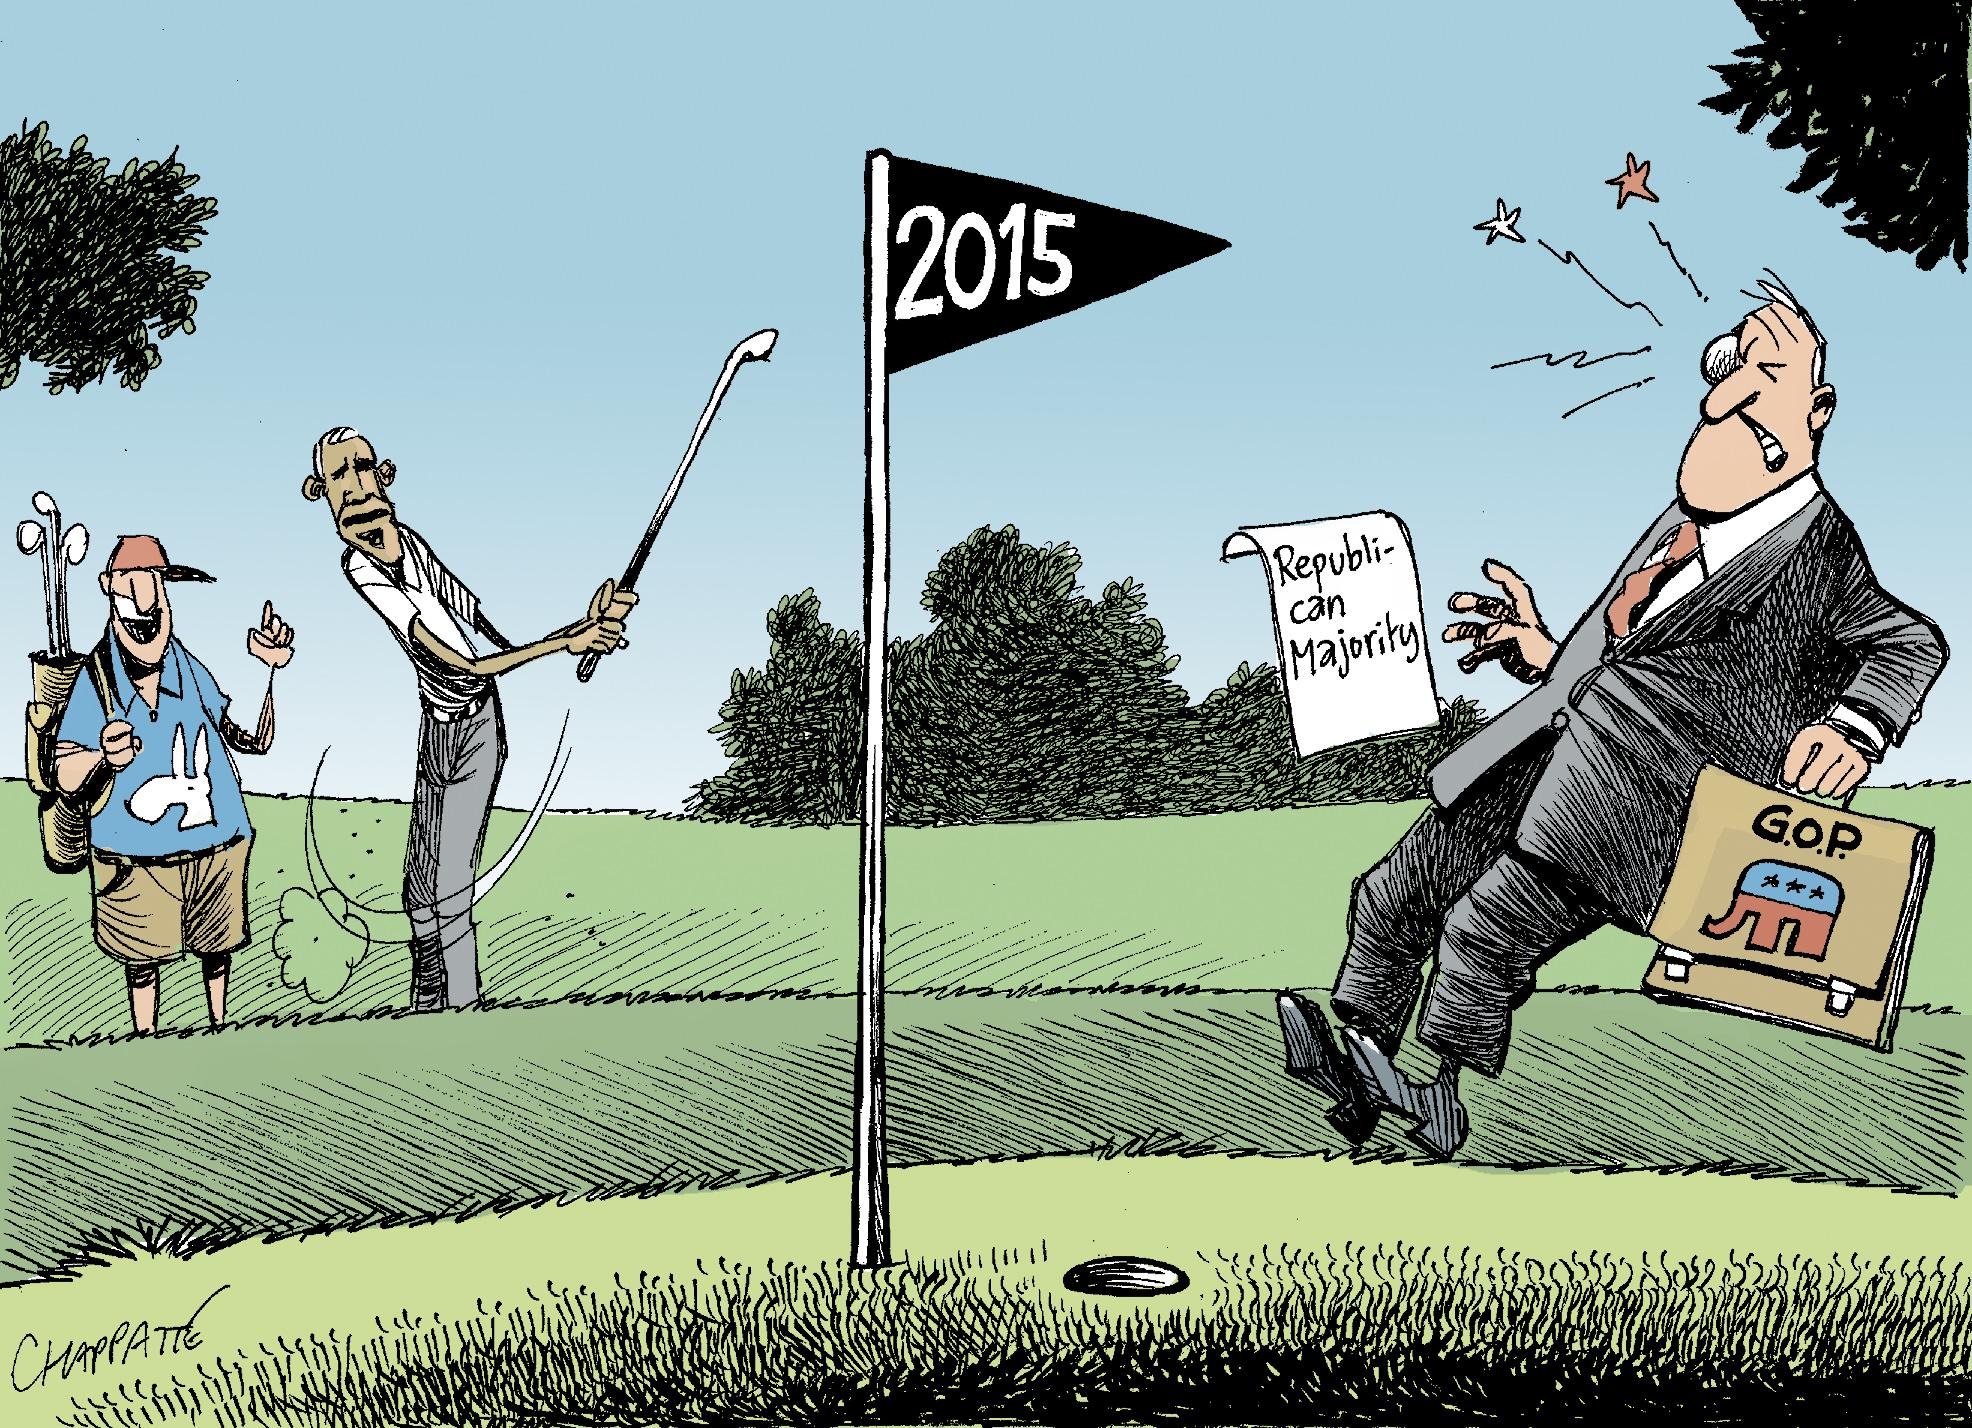 Obama's golf swing